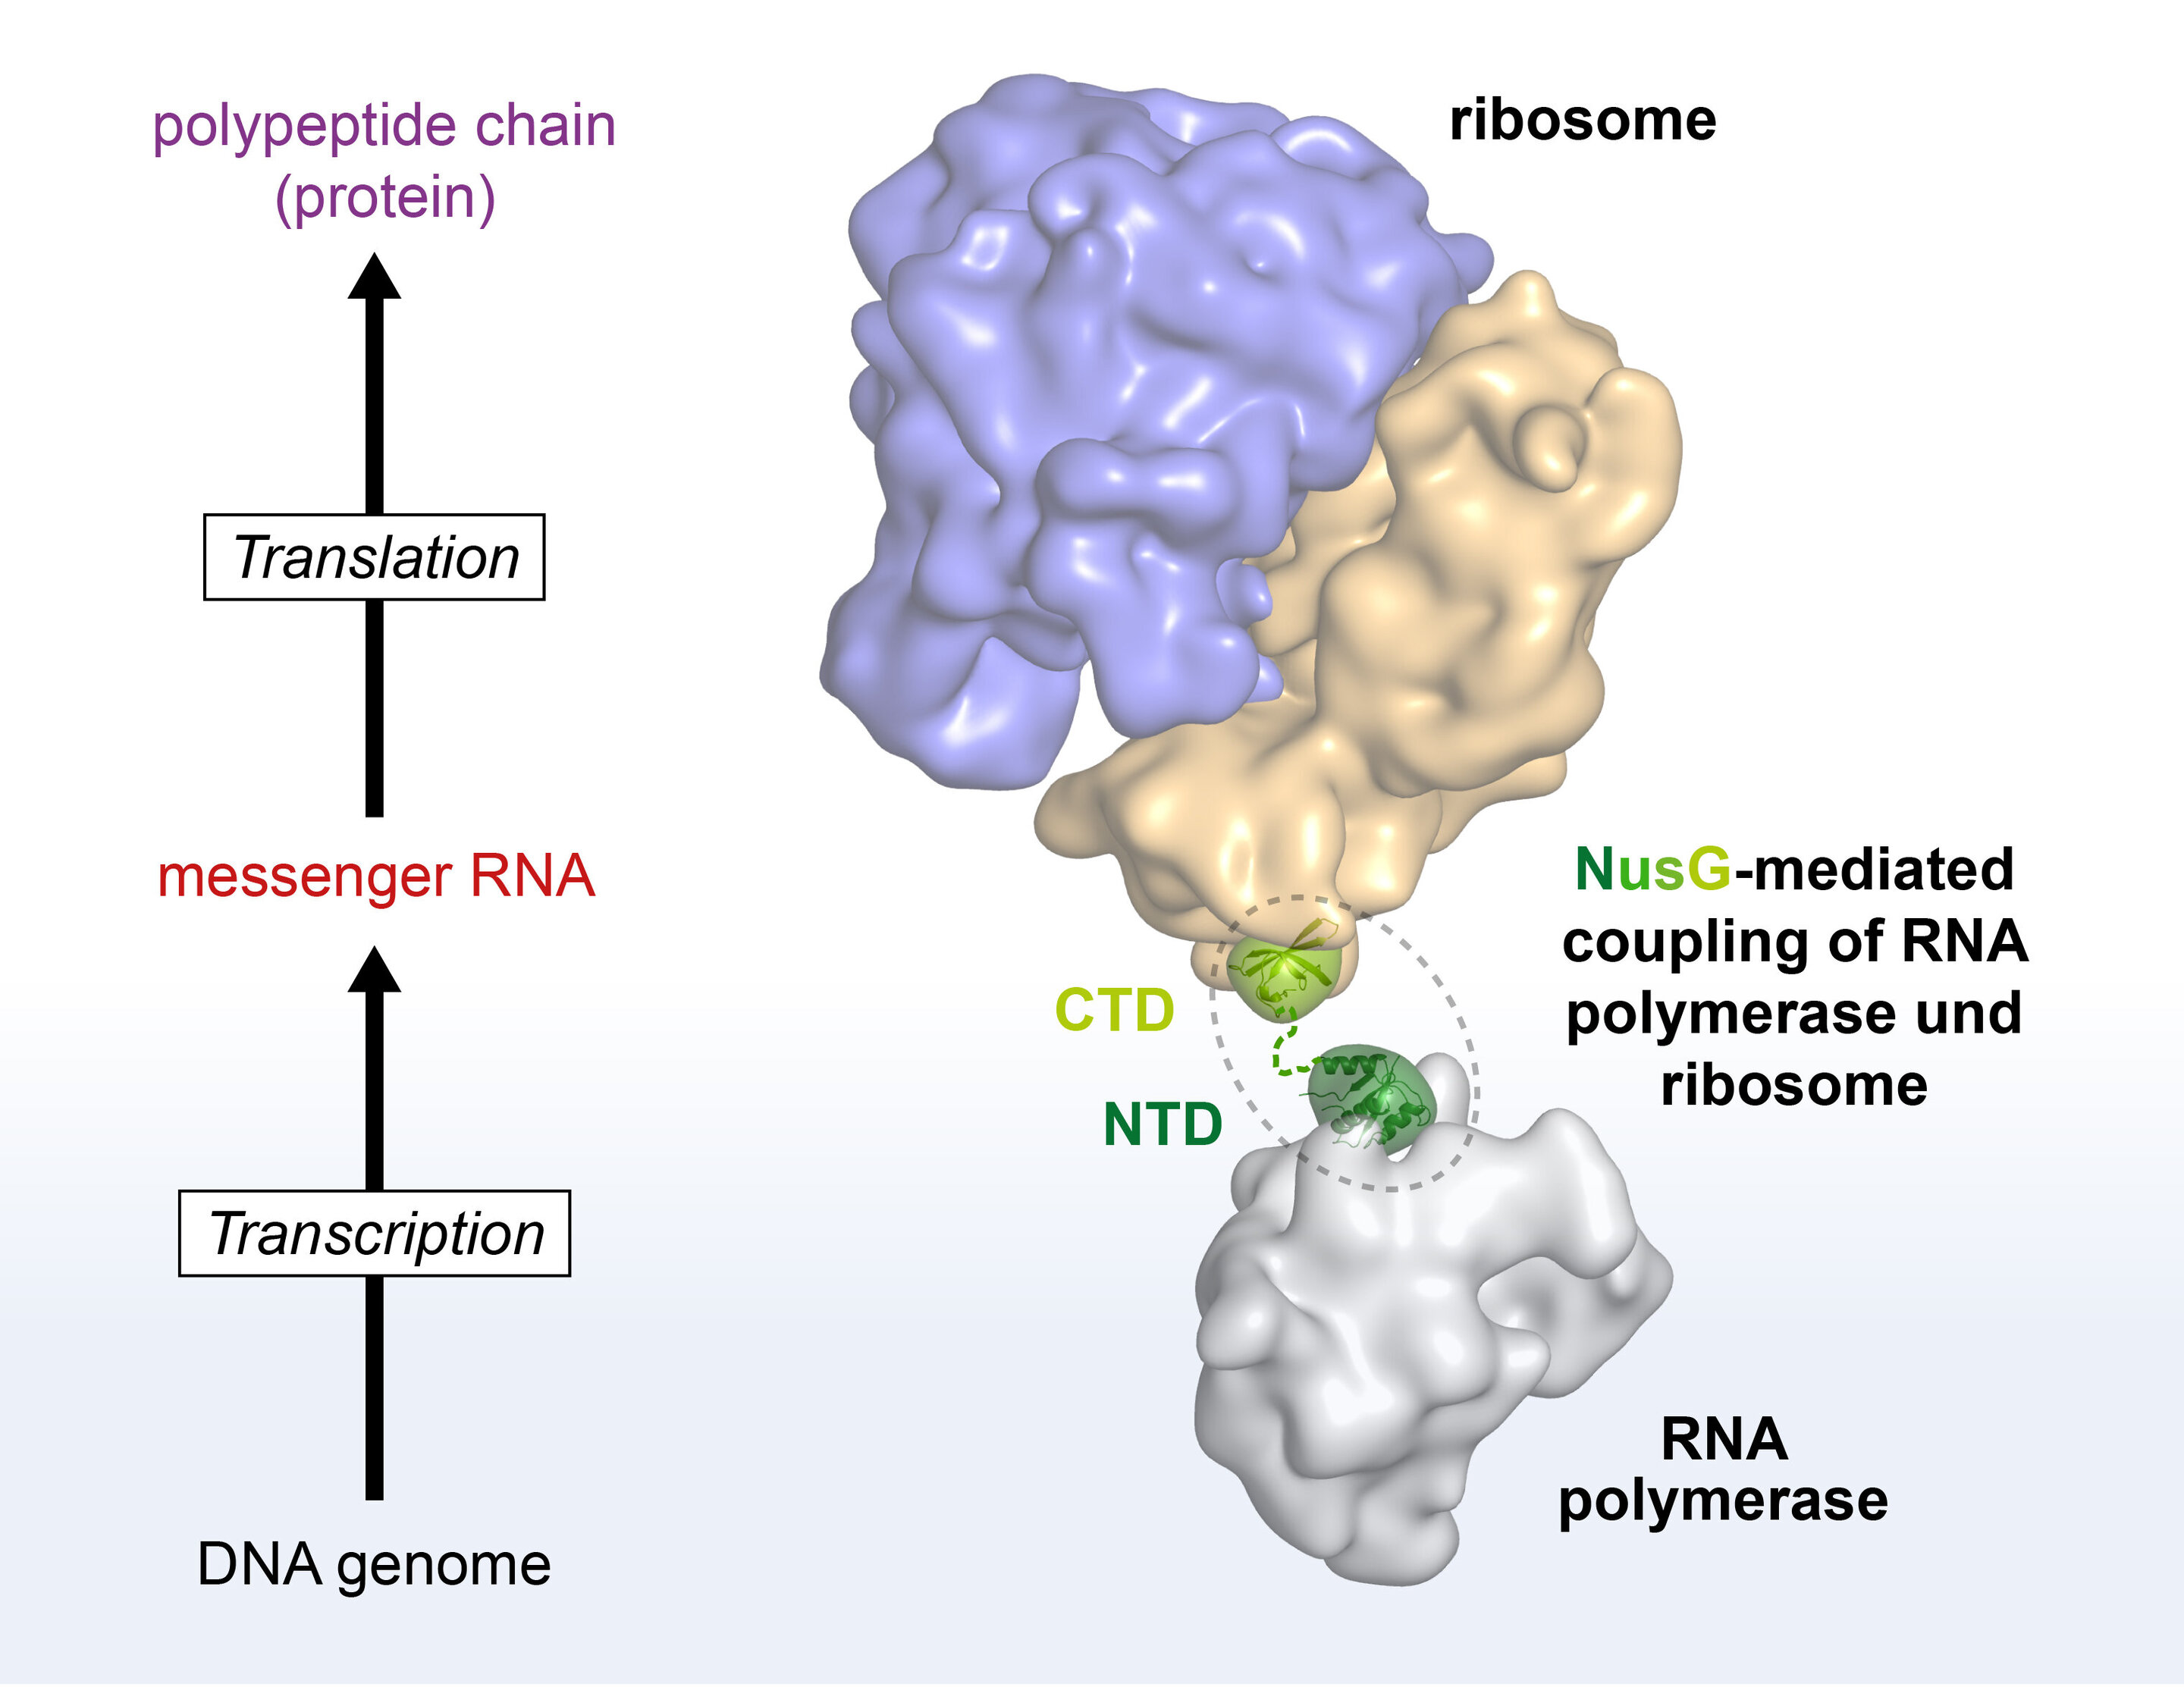 protein biosynthesis